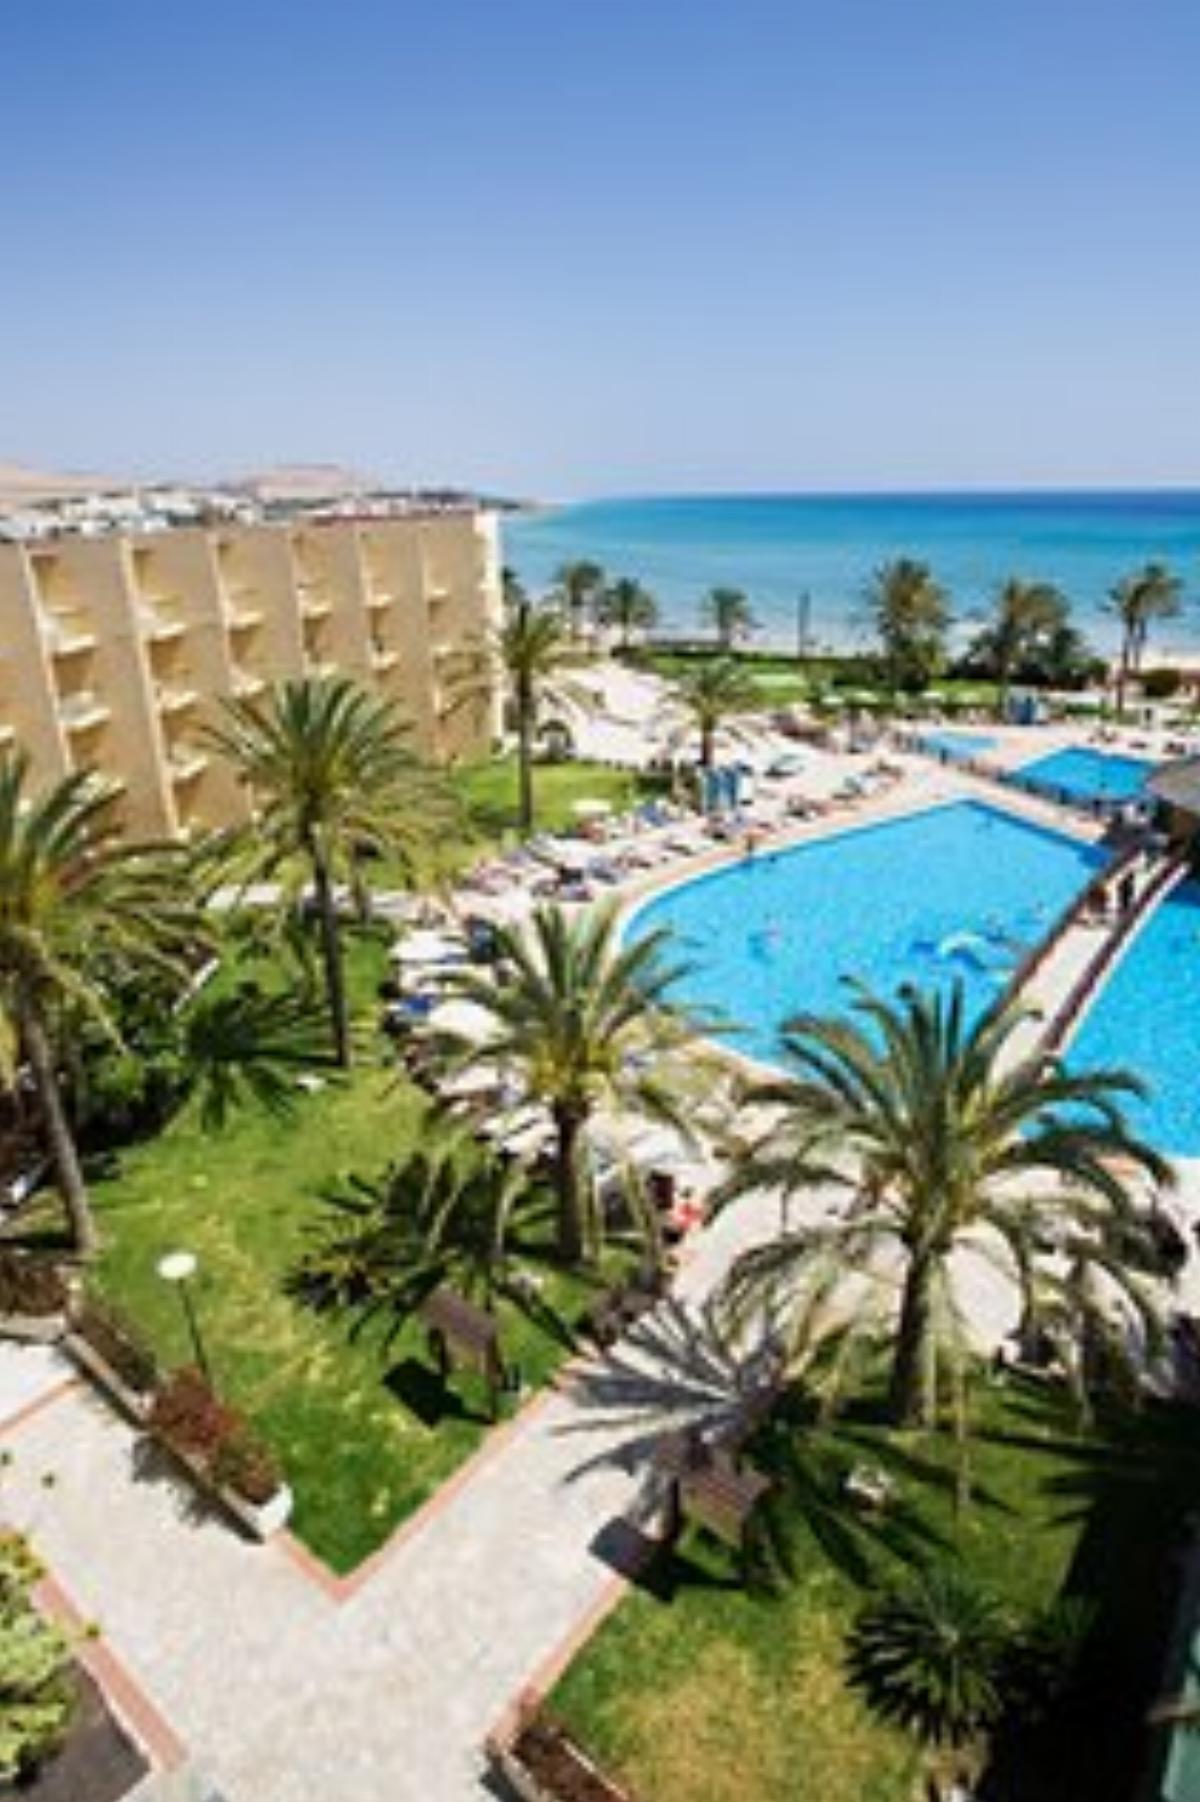 Sunrise Costa Calma Beach Resort Hotel Fuerteventura Spain